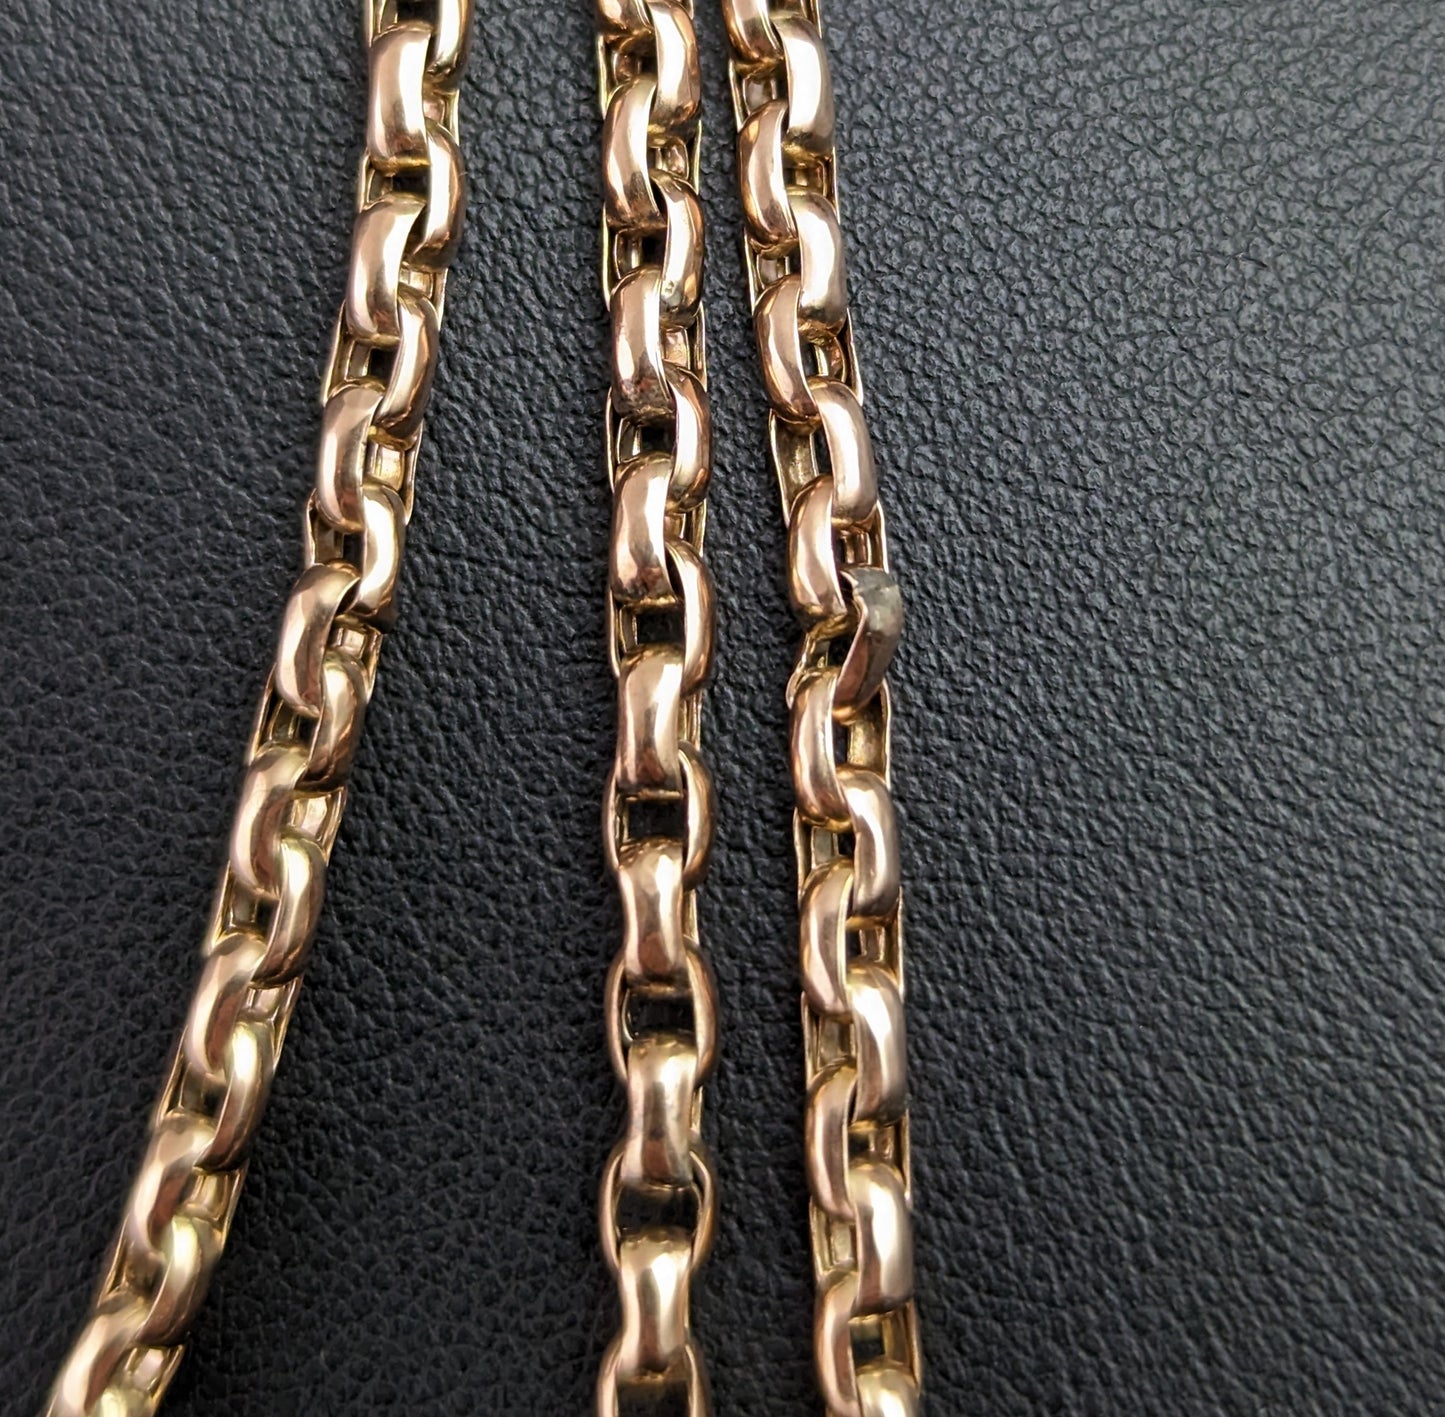 Antique 9ct gold long chain, longuard chain, Victorian